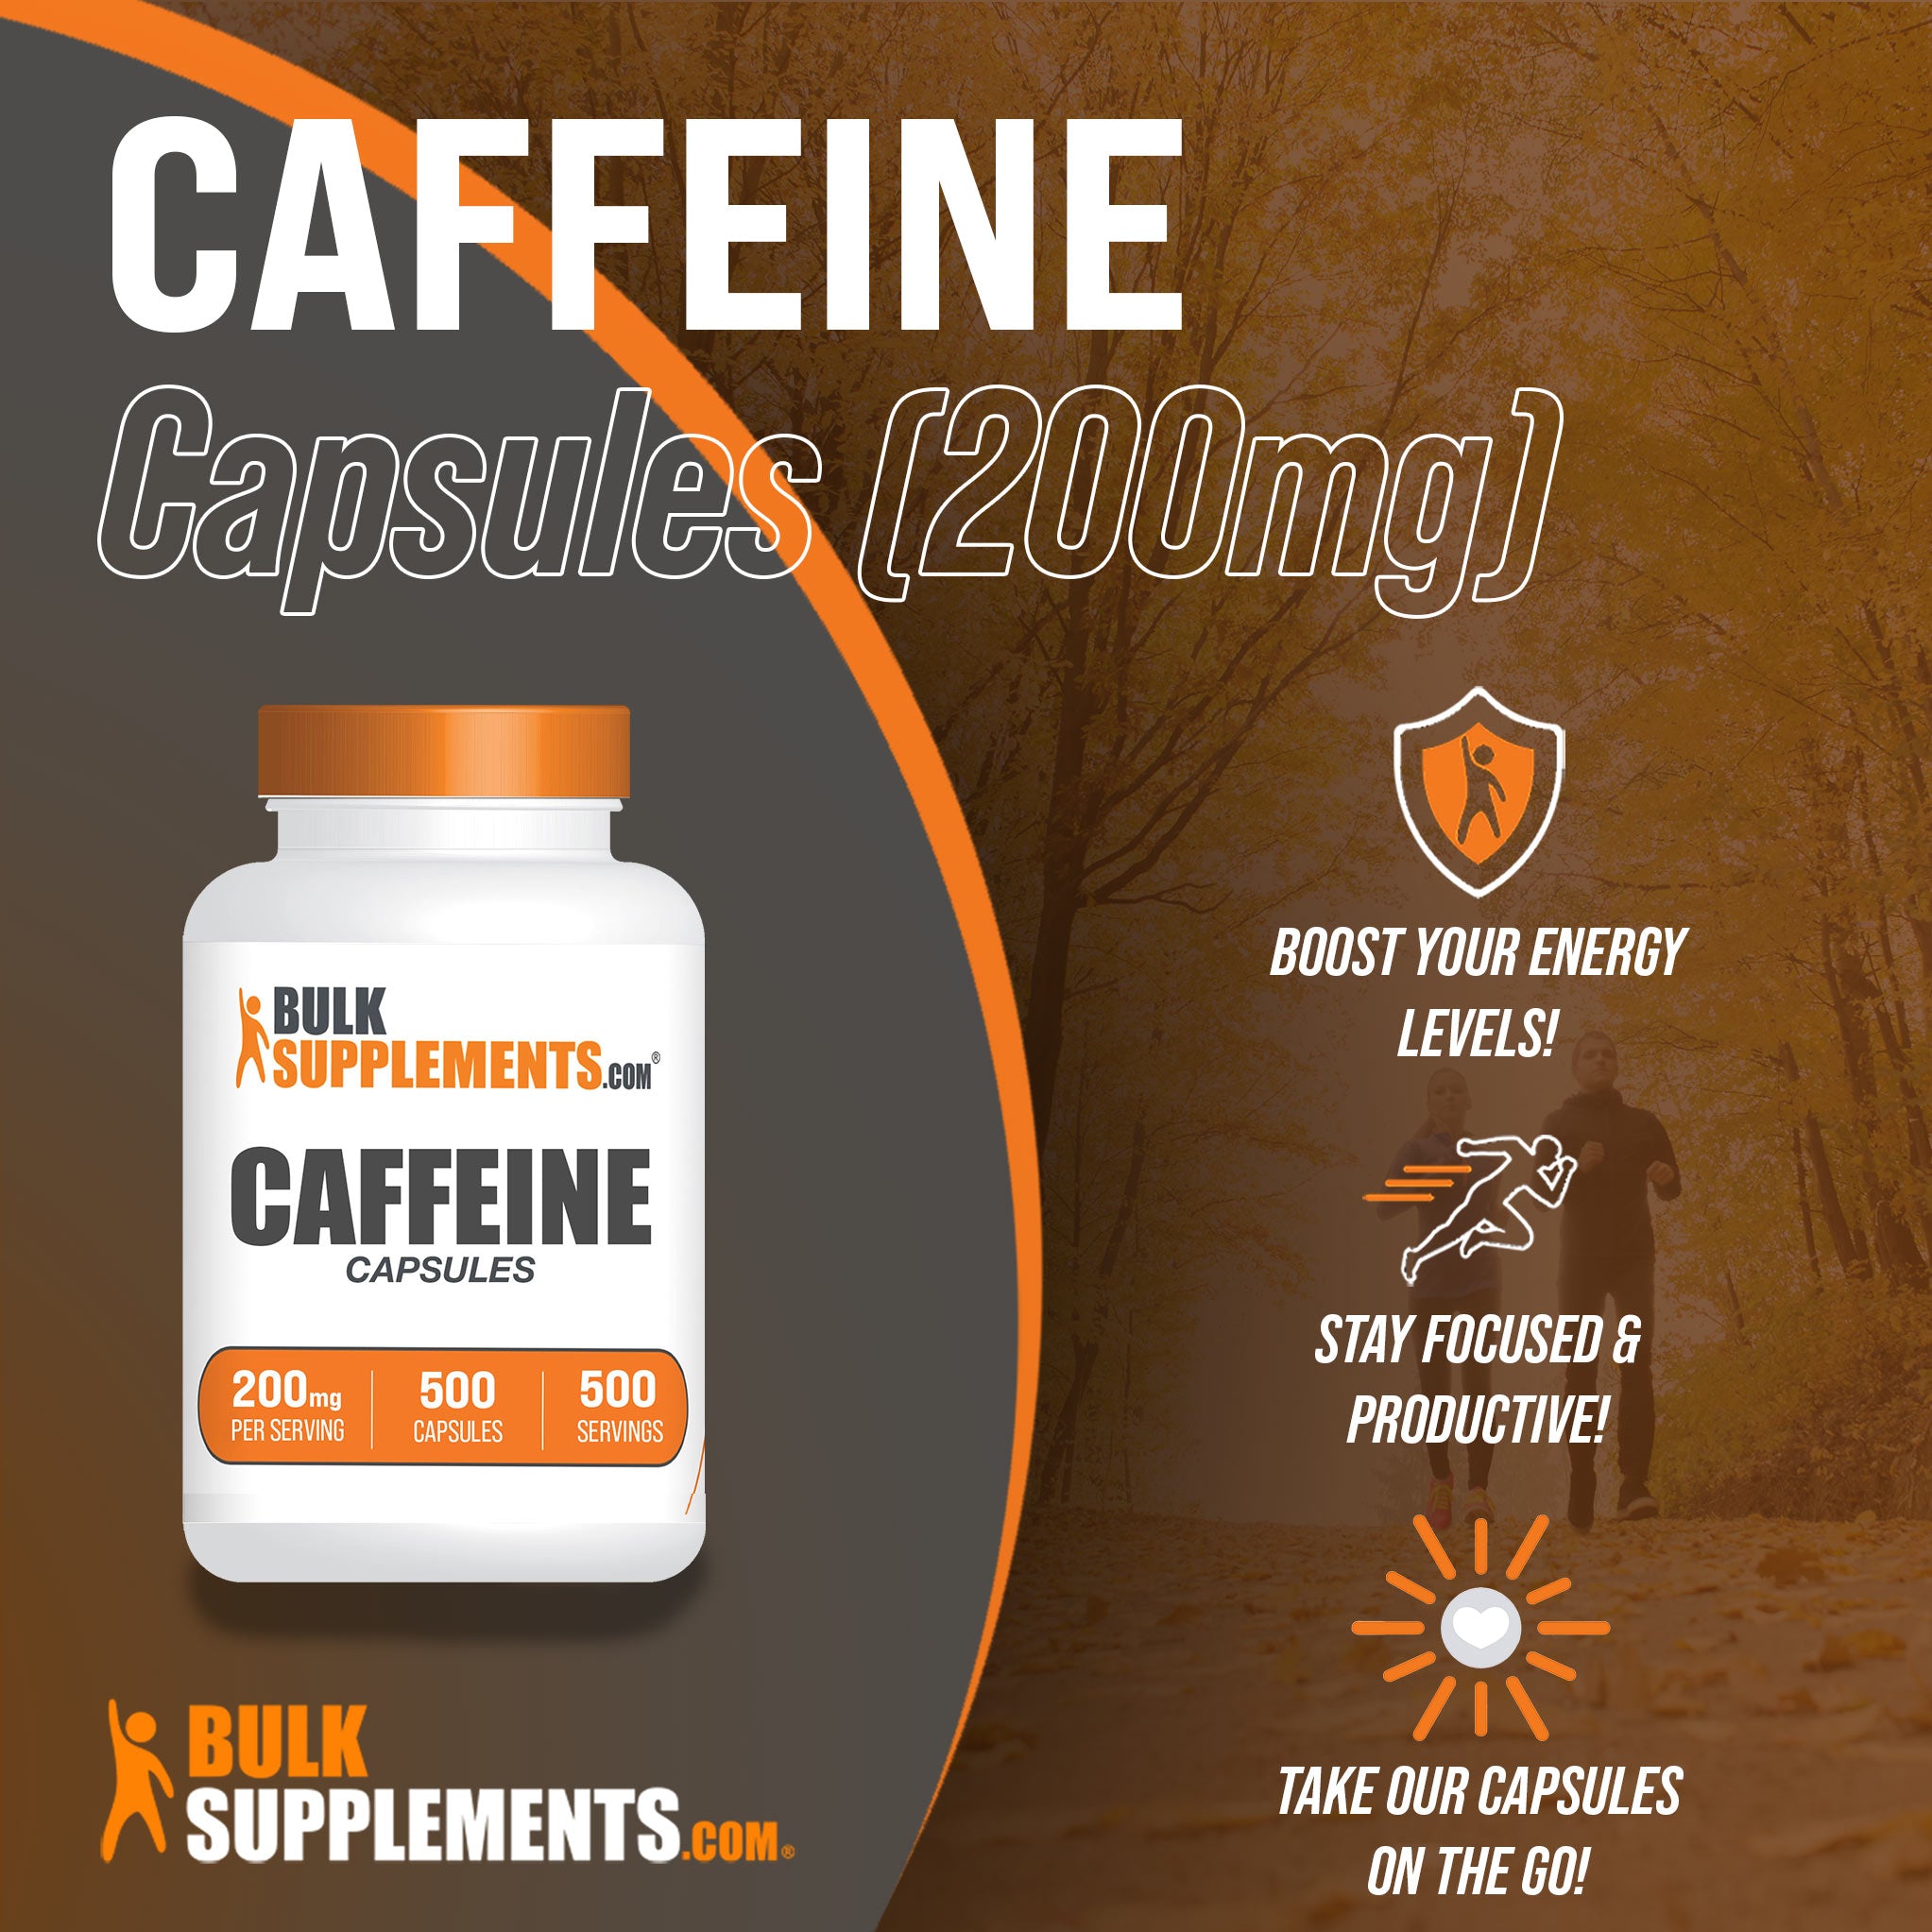 200mg, 500 caffeine pills for energy boosts!